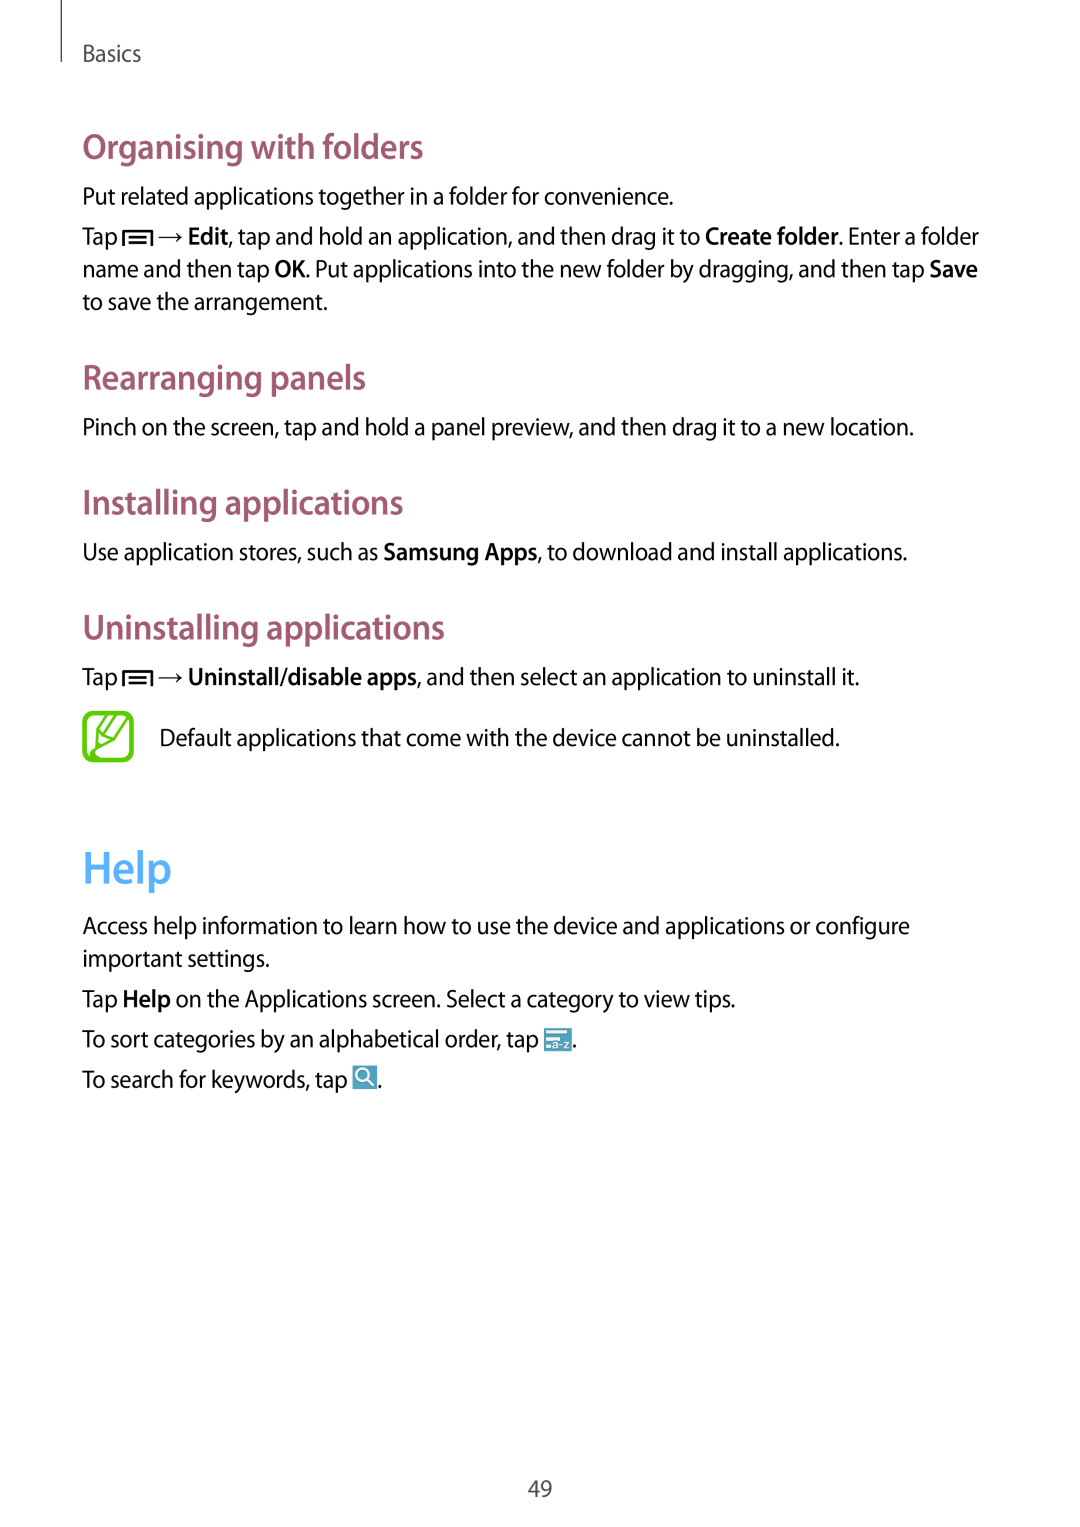 Samsung SM-N9005ZKEKSA manual Help, Organising with folders, Installing applications, Uninstalling applications, Basics 